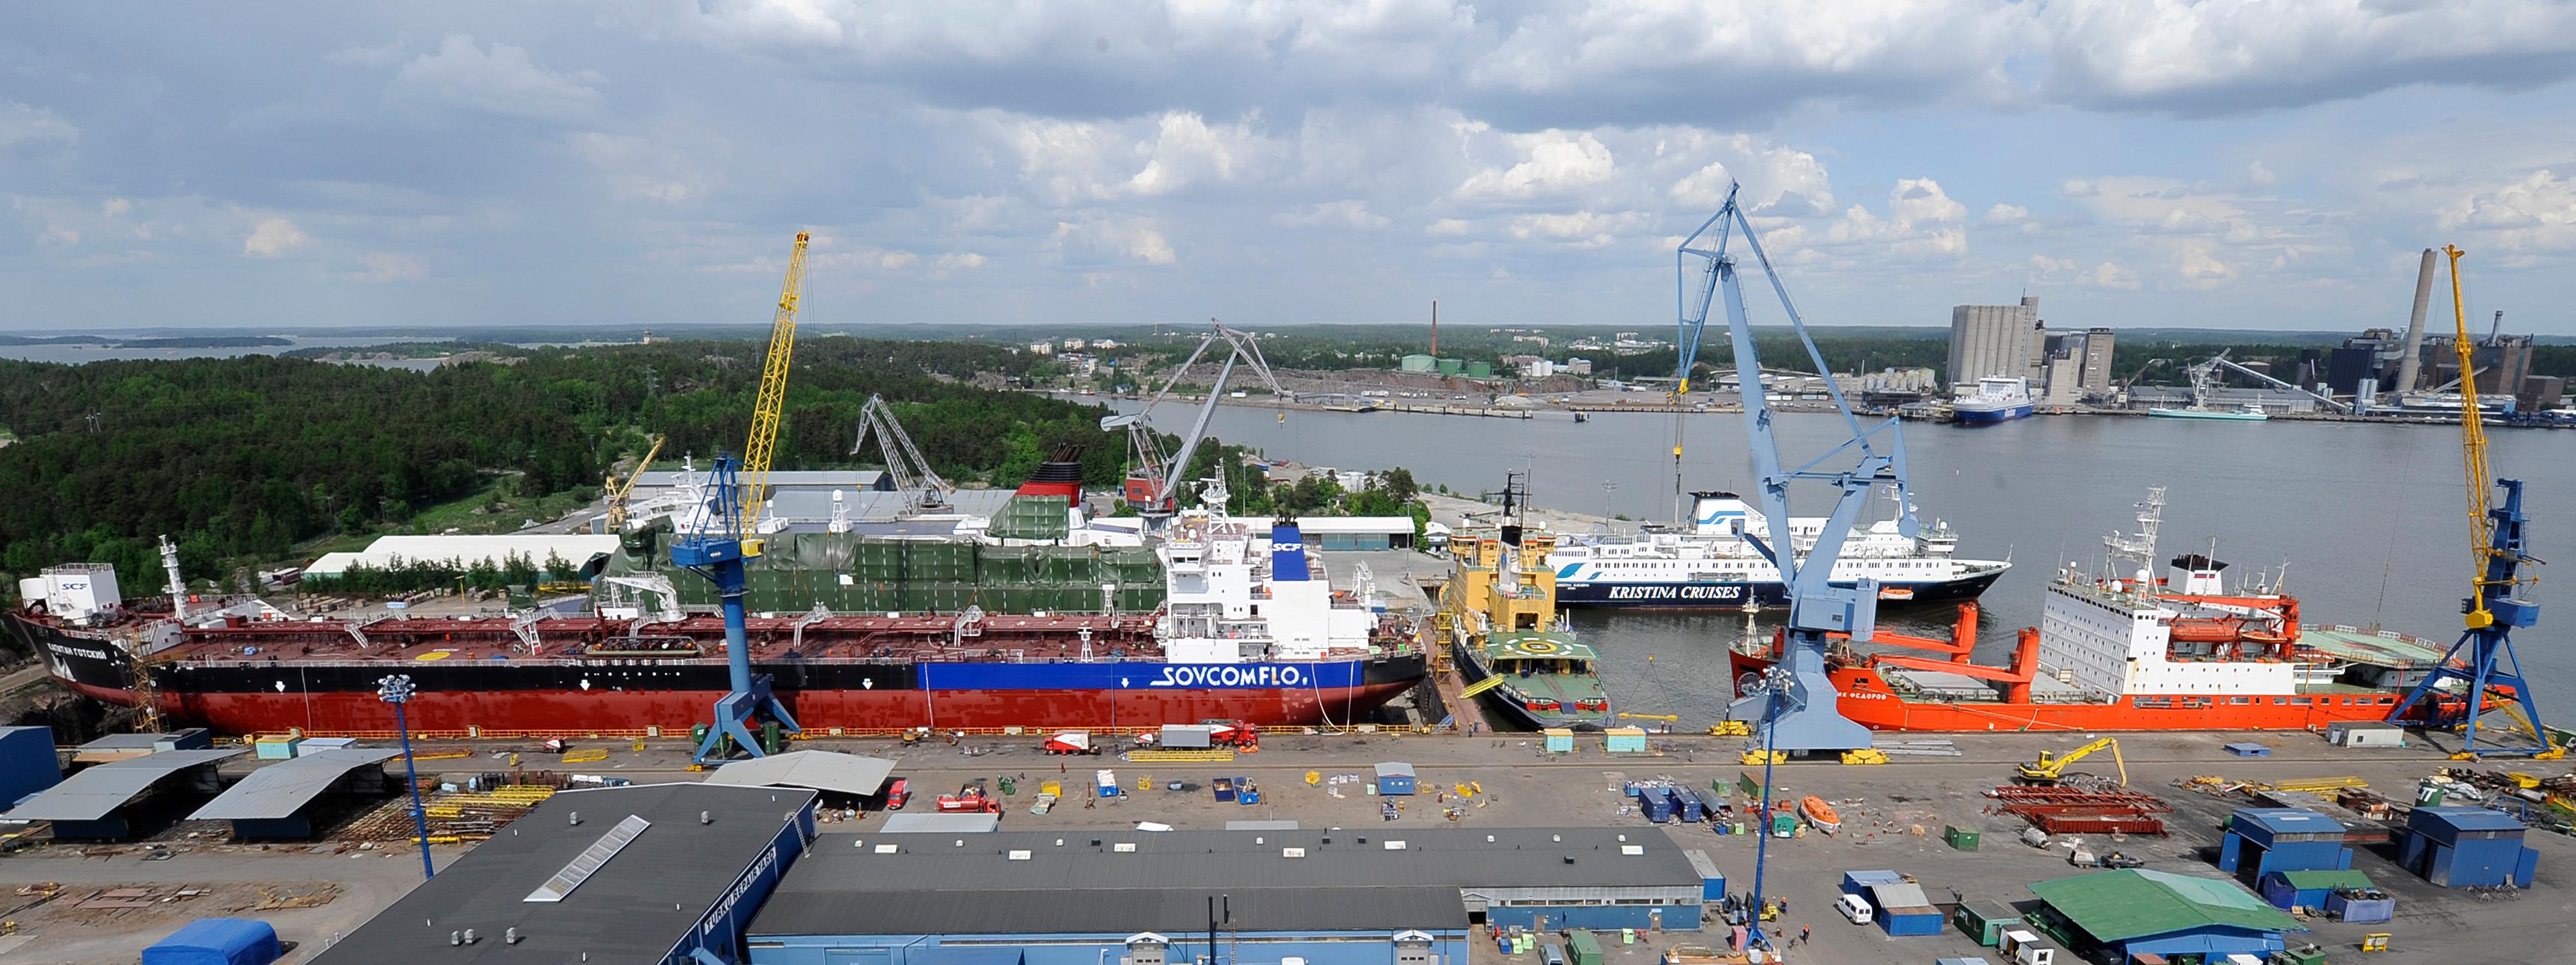 Shipyard - TURKU REPAIR YARD LTD, Naantali, Finland